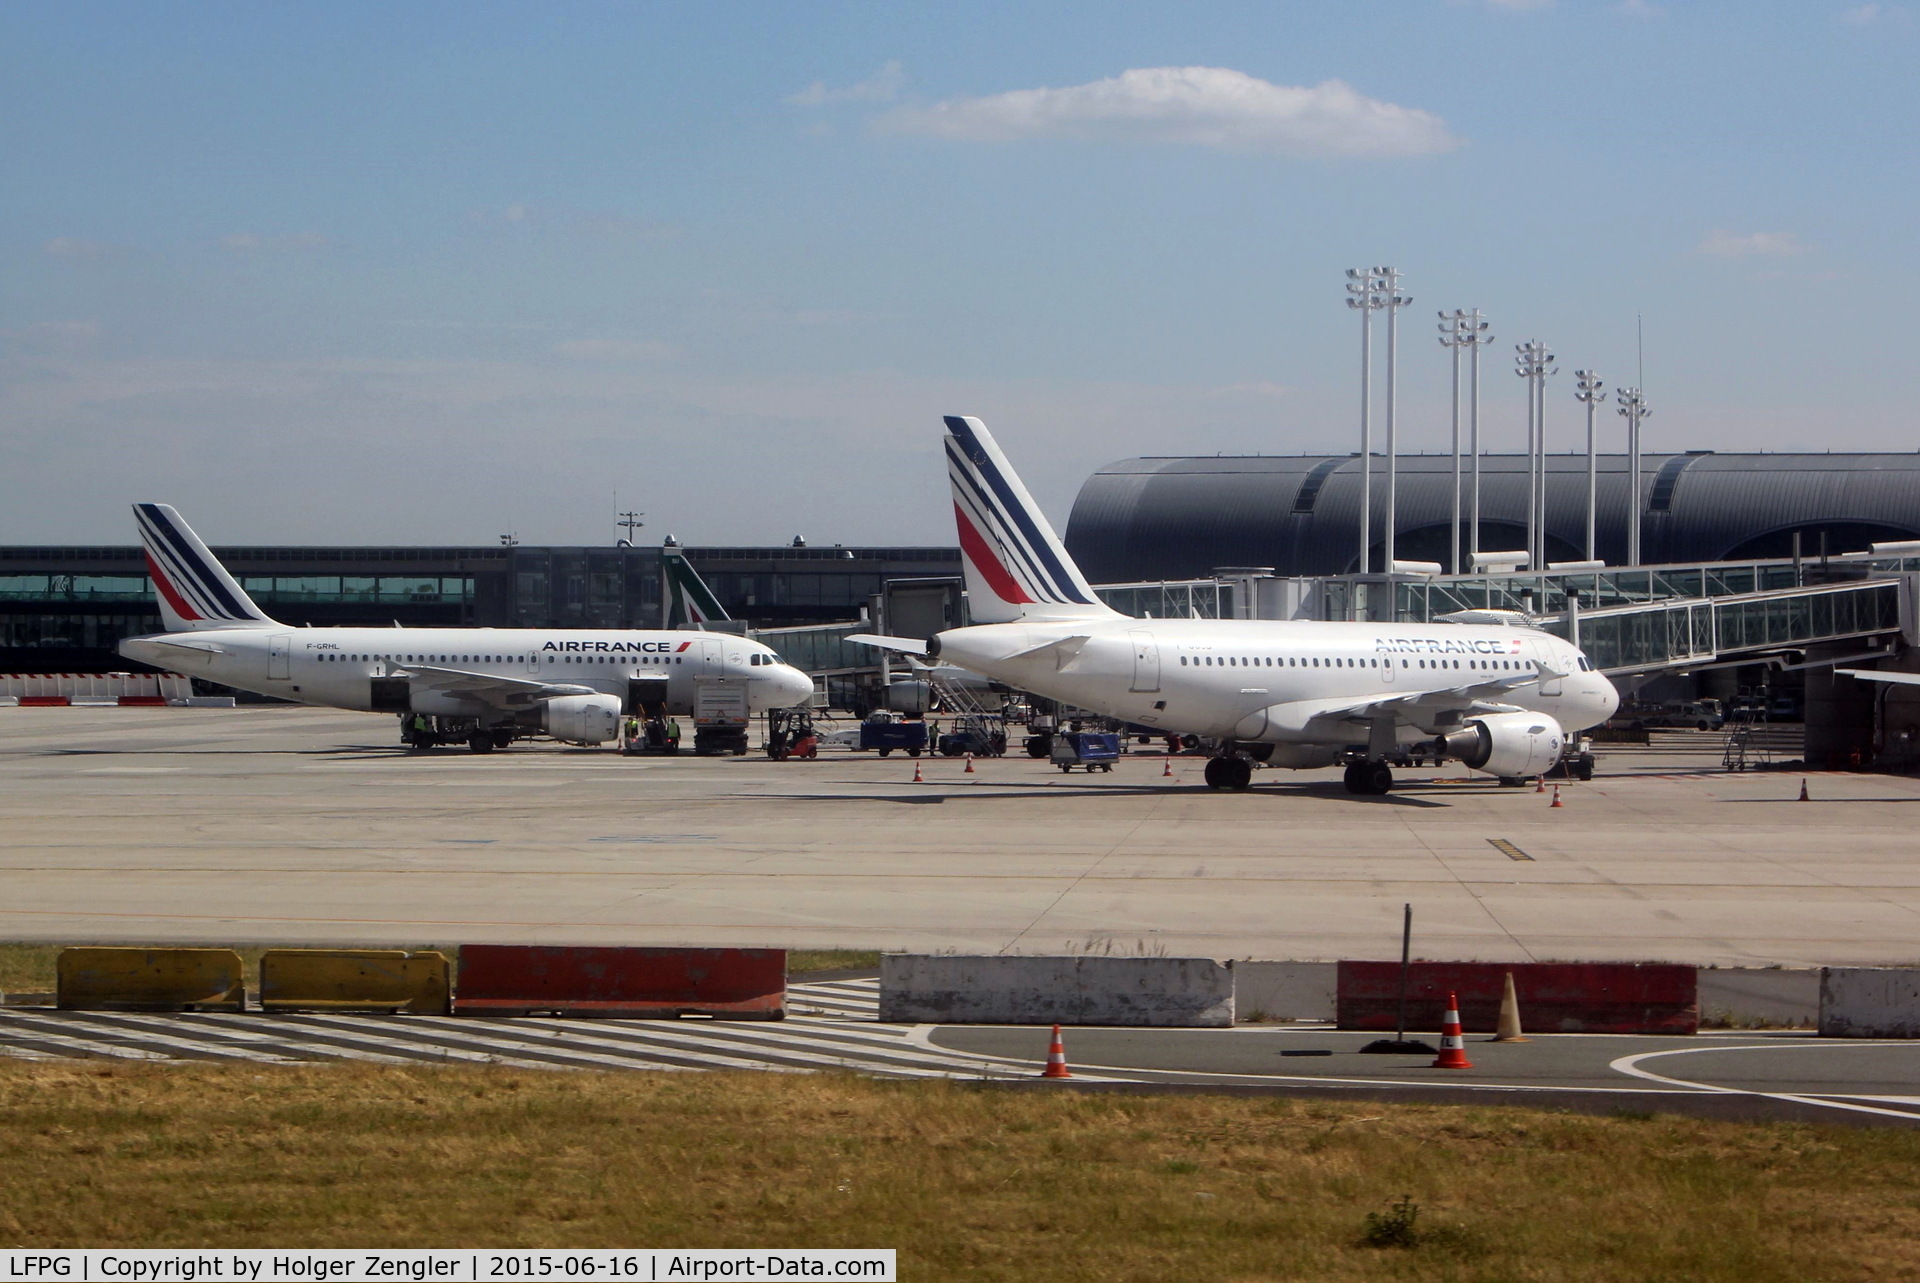 Paris Charles de Gaulle Airport (Roissy Airport), Paris France (LFPG) - Impression at terminal 2.....